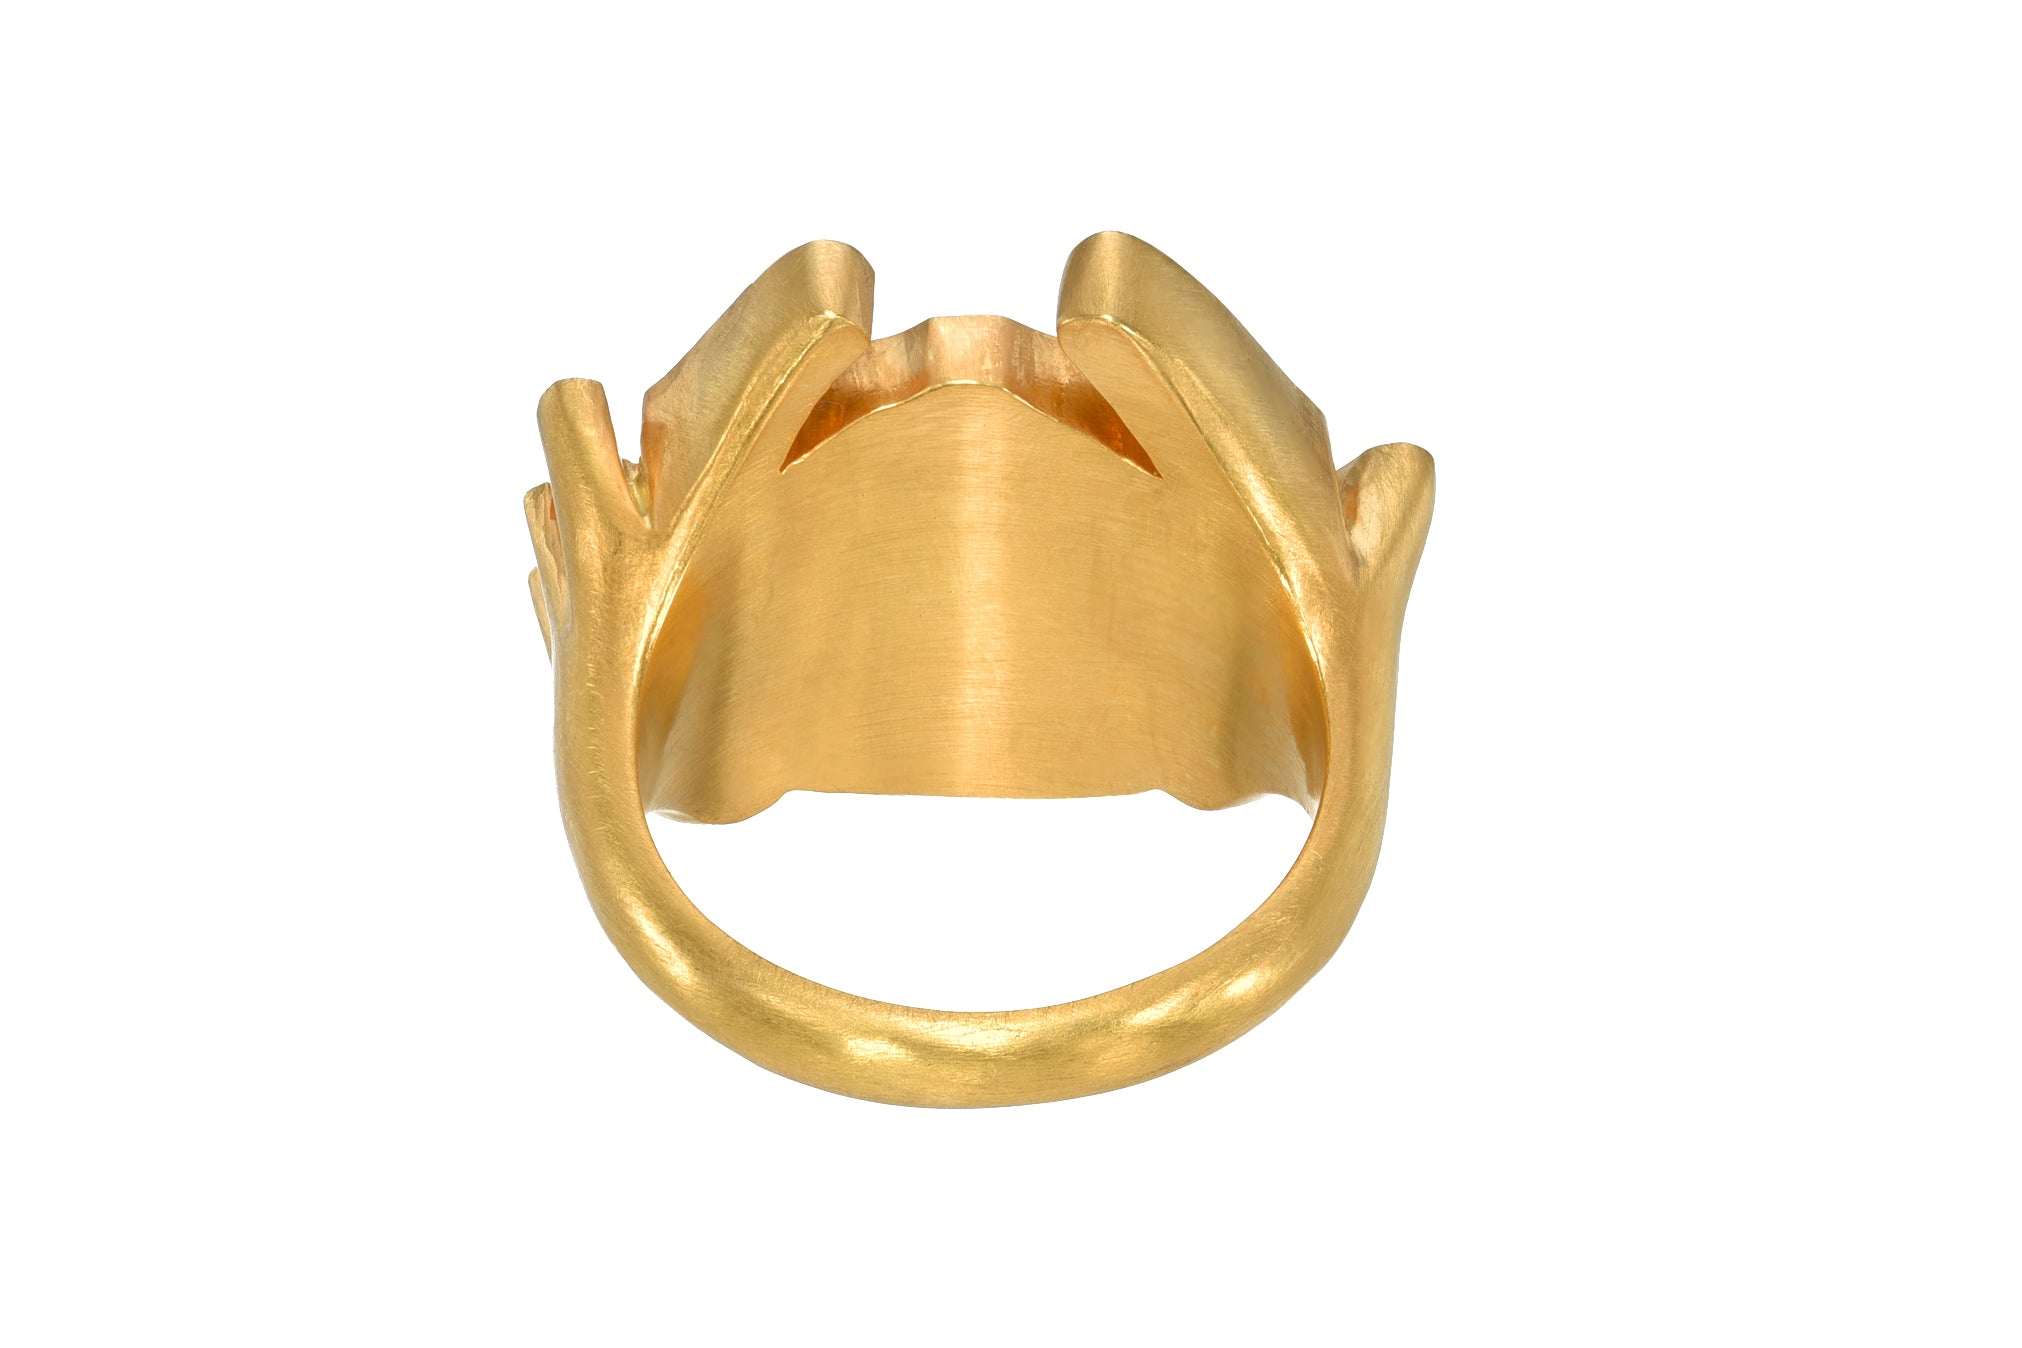 darius jewels 18k yellow gold dendera diamond crab ring cancer zodiac antique old mine cut diamond dendera temple hathor egypt darius khonsary